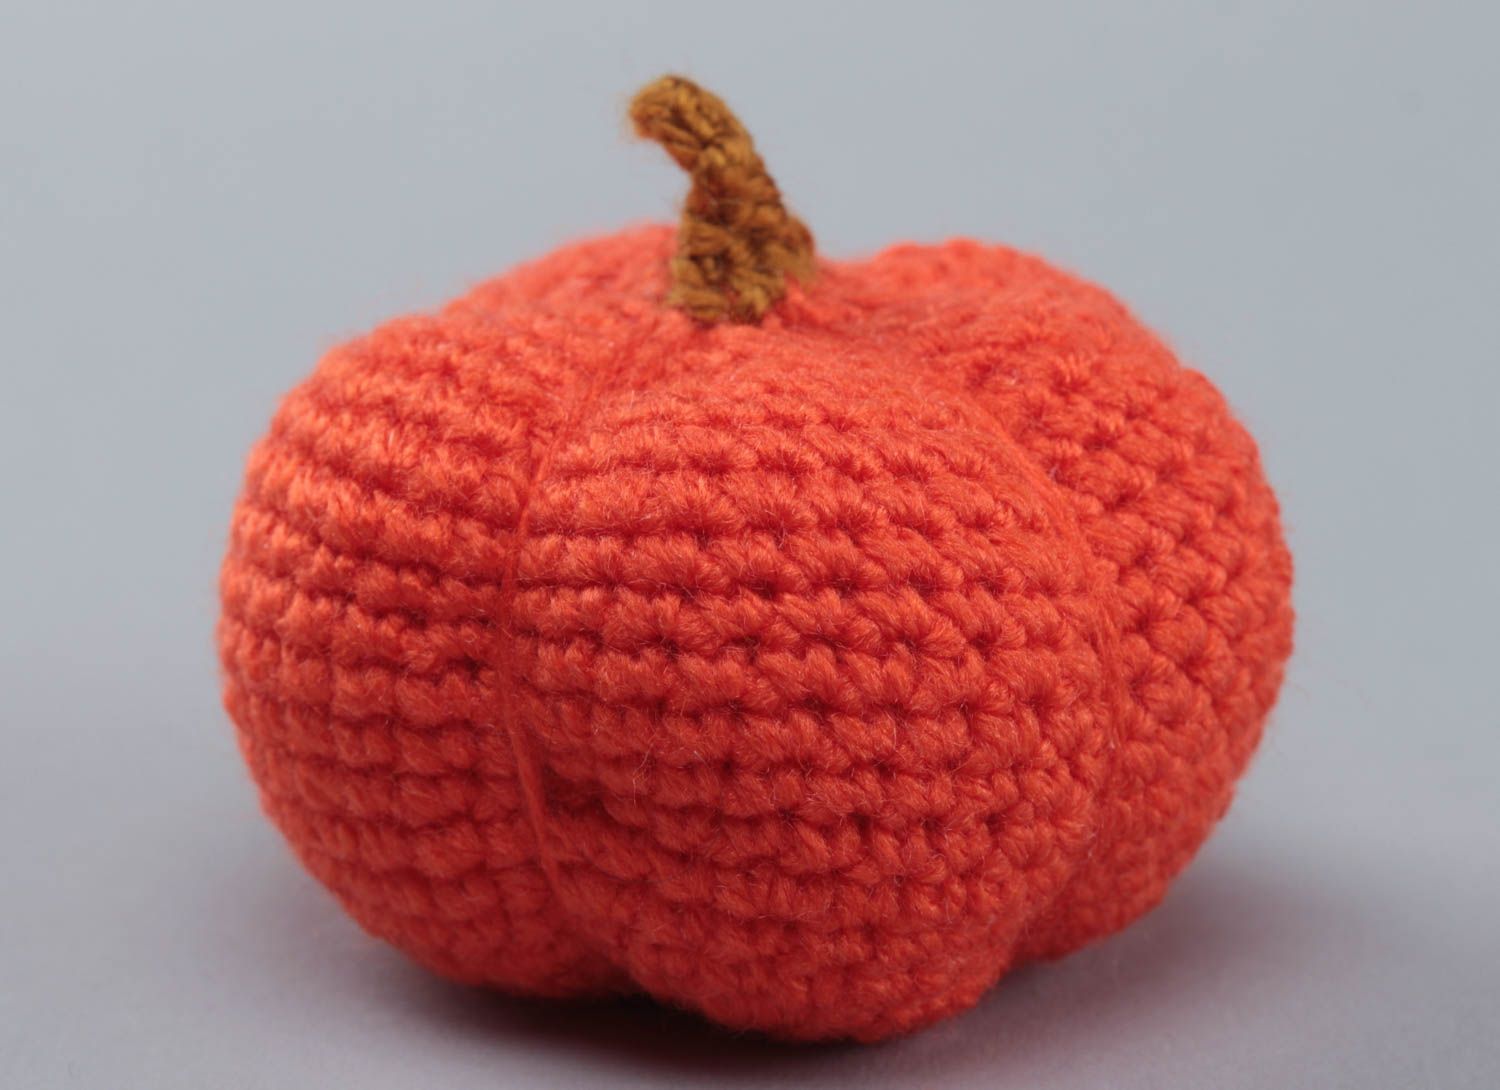 Handmade small crochet soft toy orange pumpkin for kids and interior decor photo 2